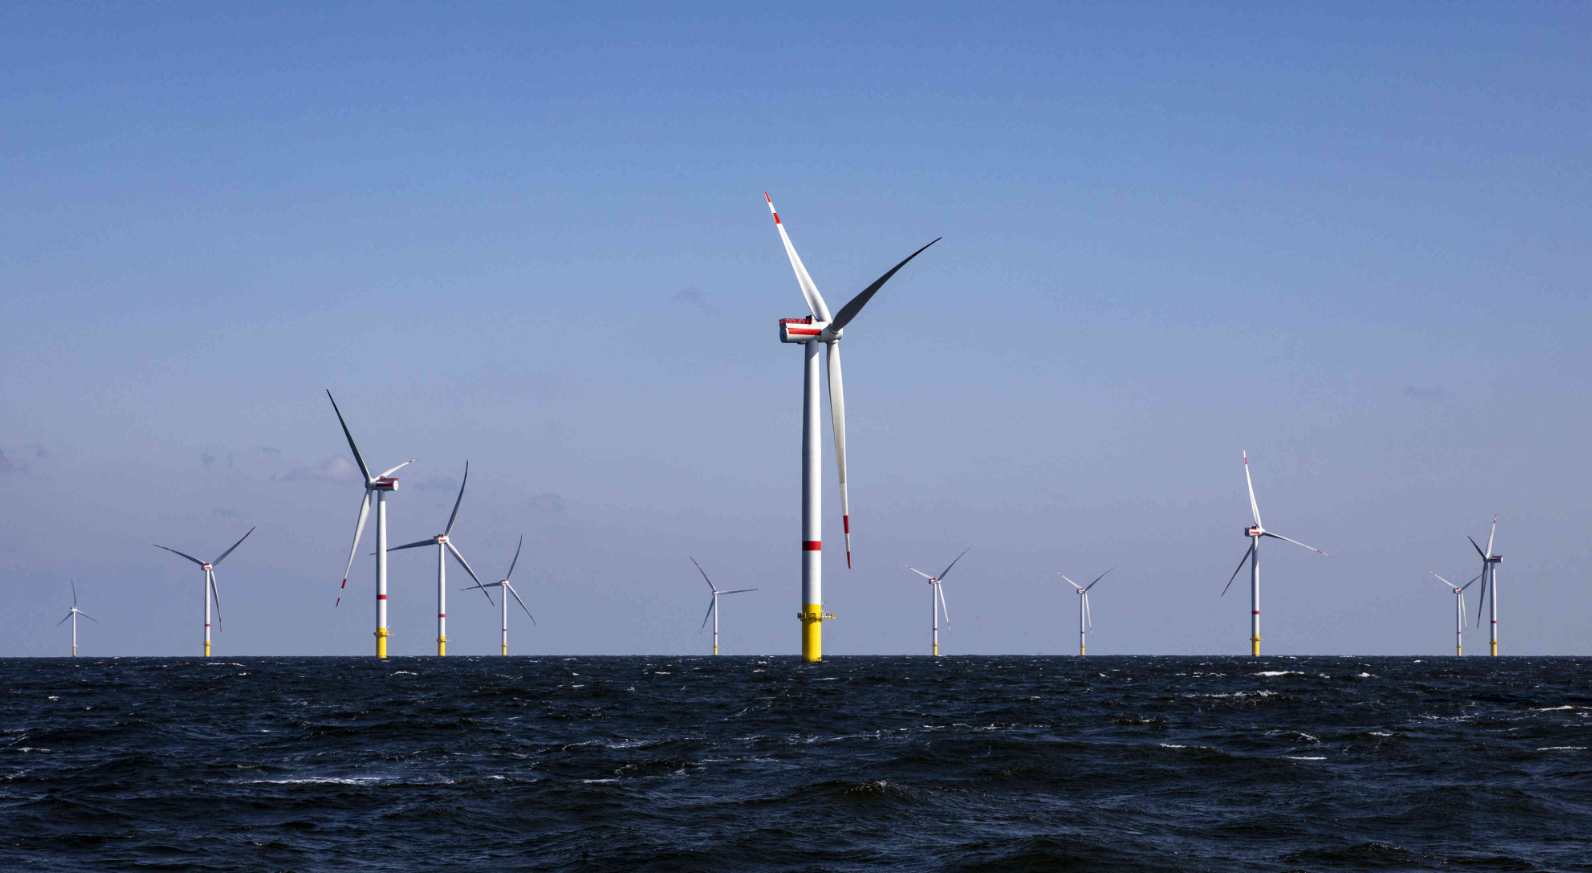 The Rentel offshore wind farm in Belgium